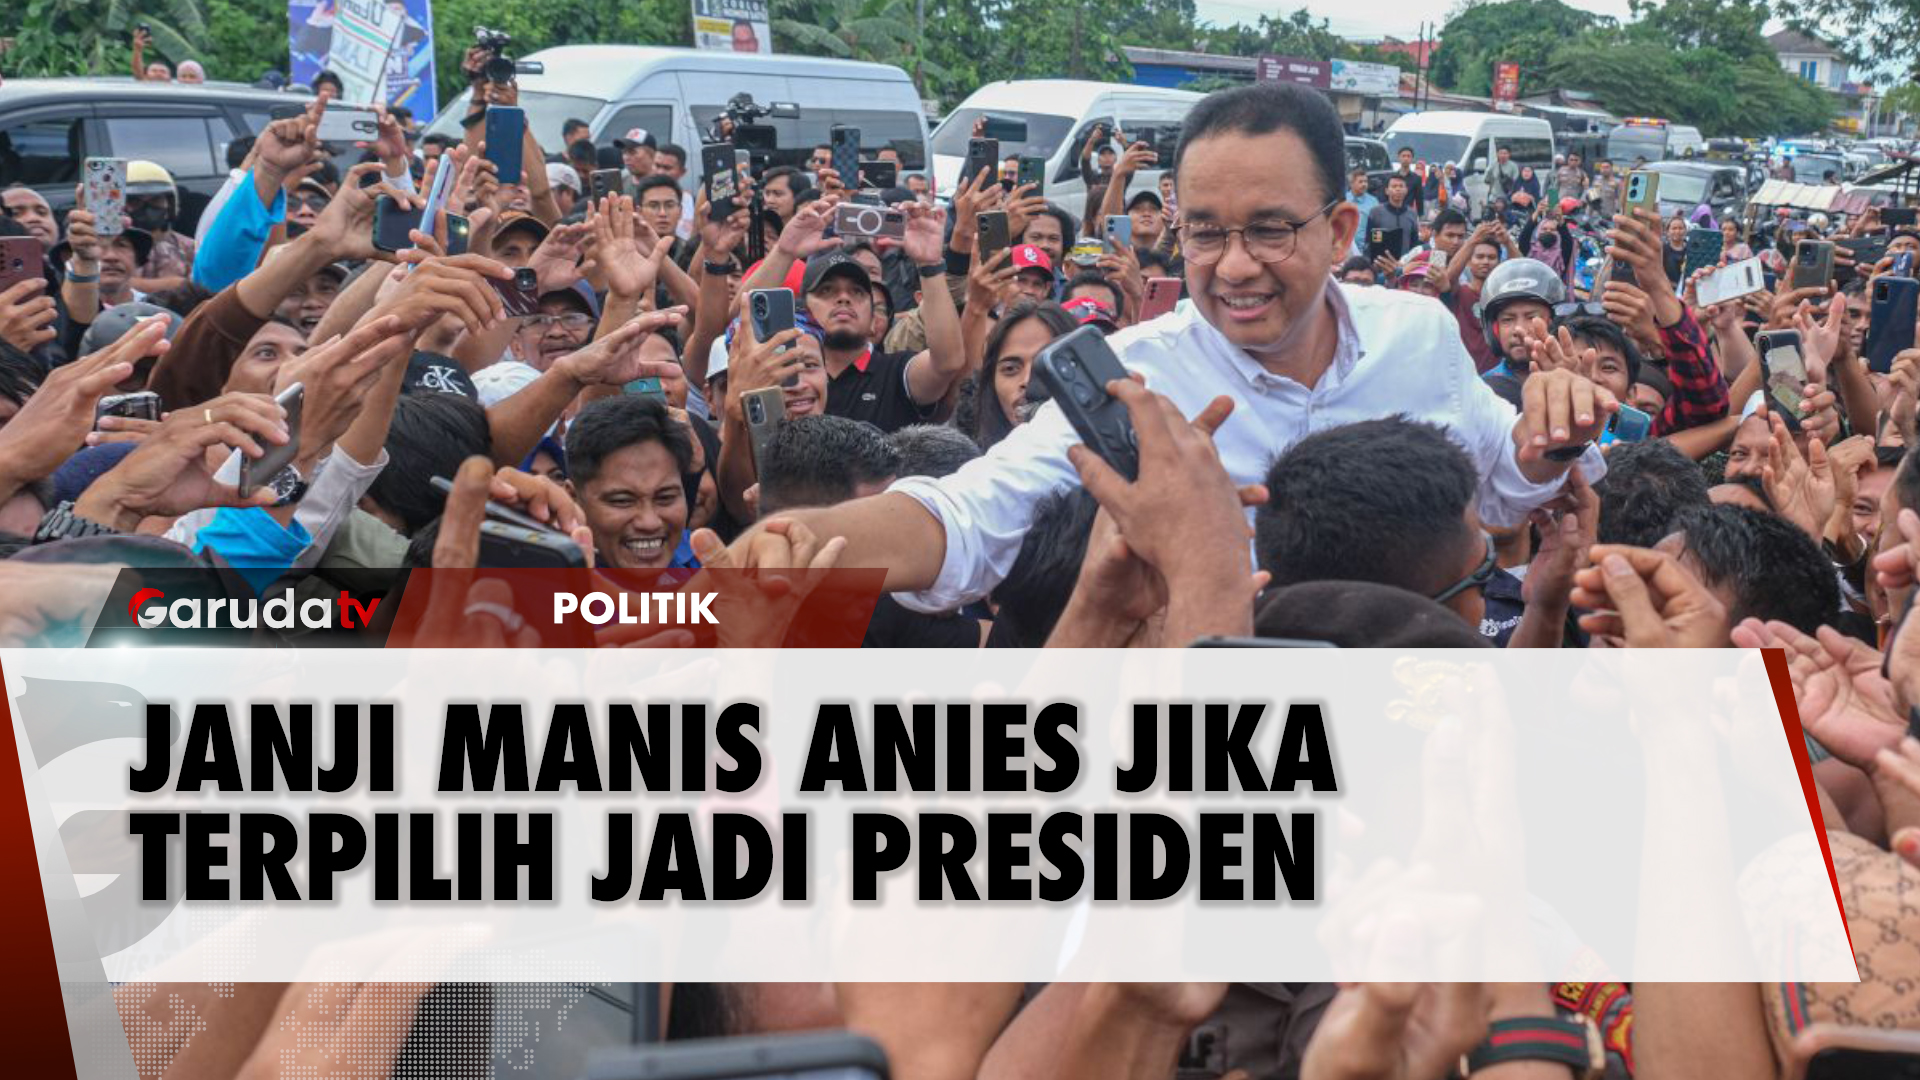 Janji Manis Anies Baswedan ke Warga Bekasi Jika Terpilih jadi Presiden